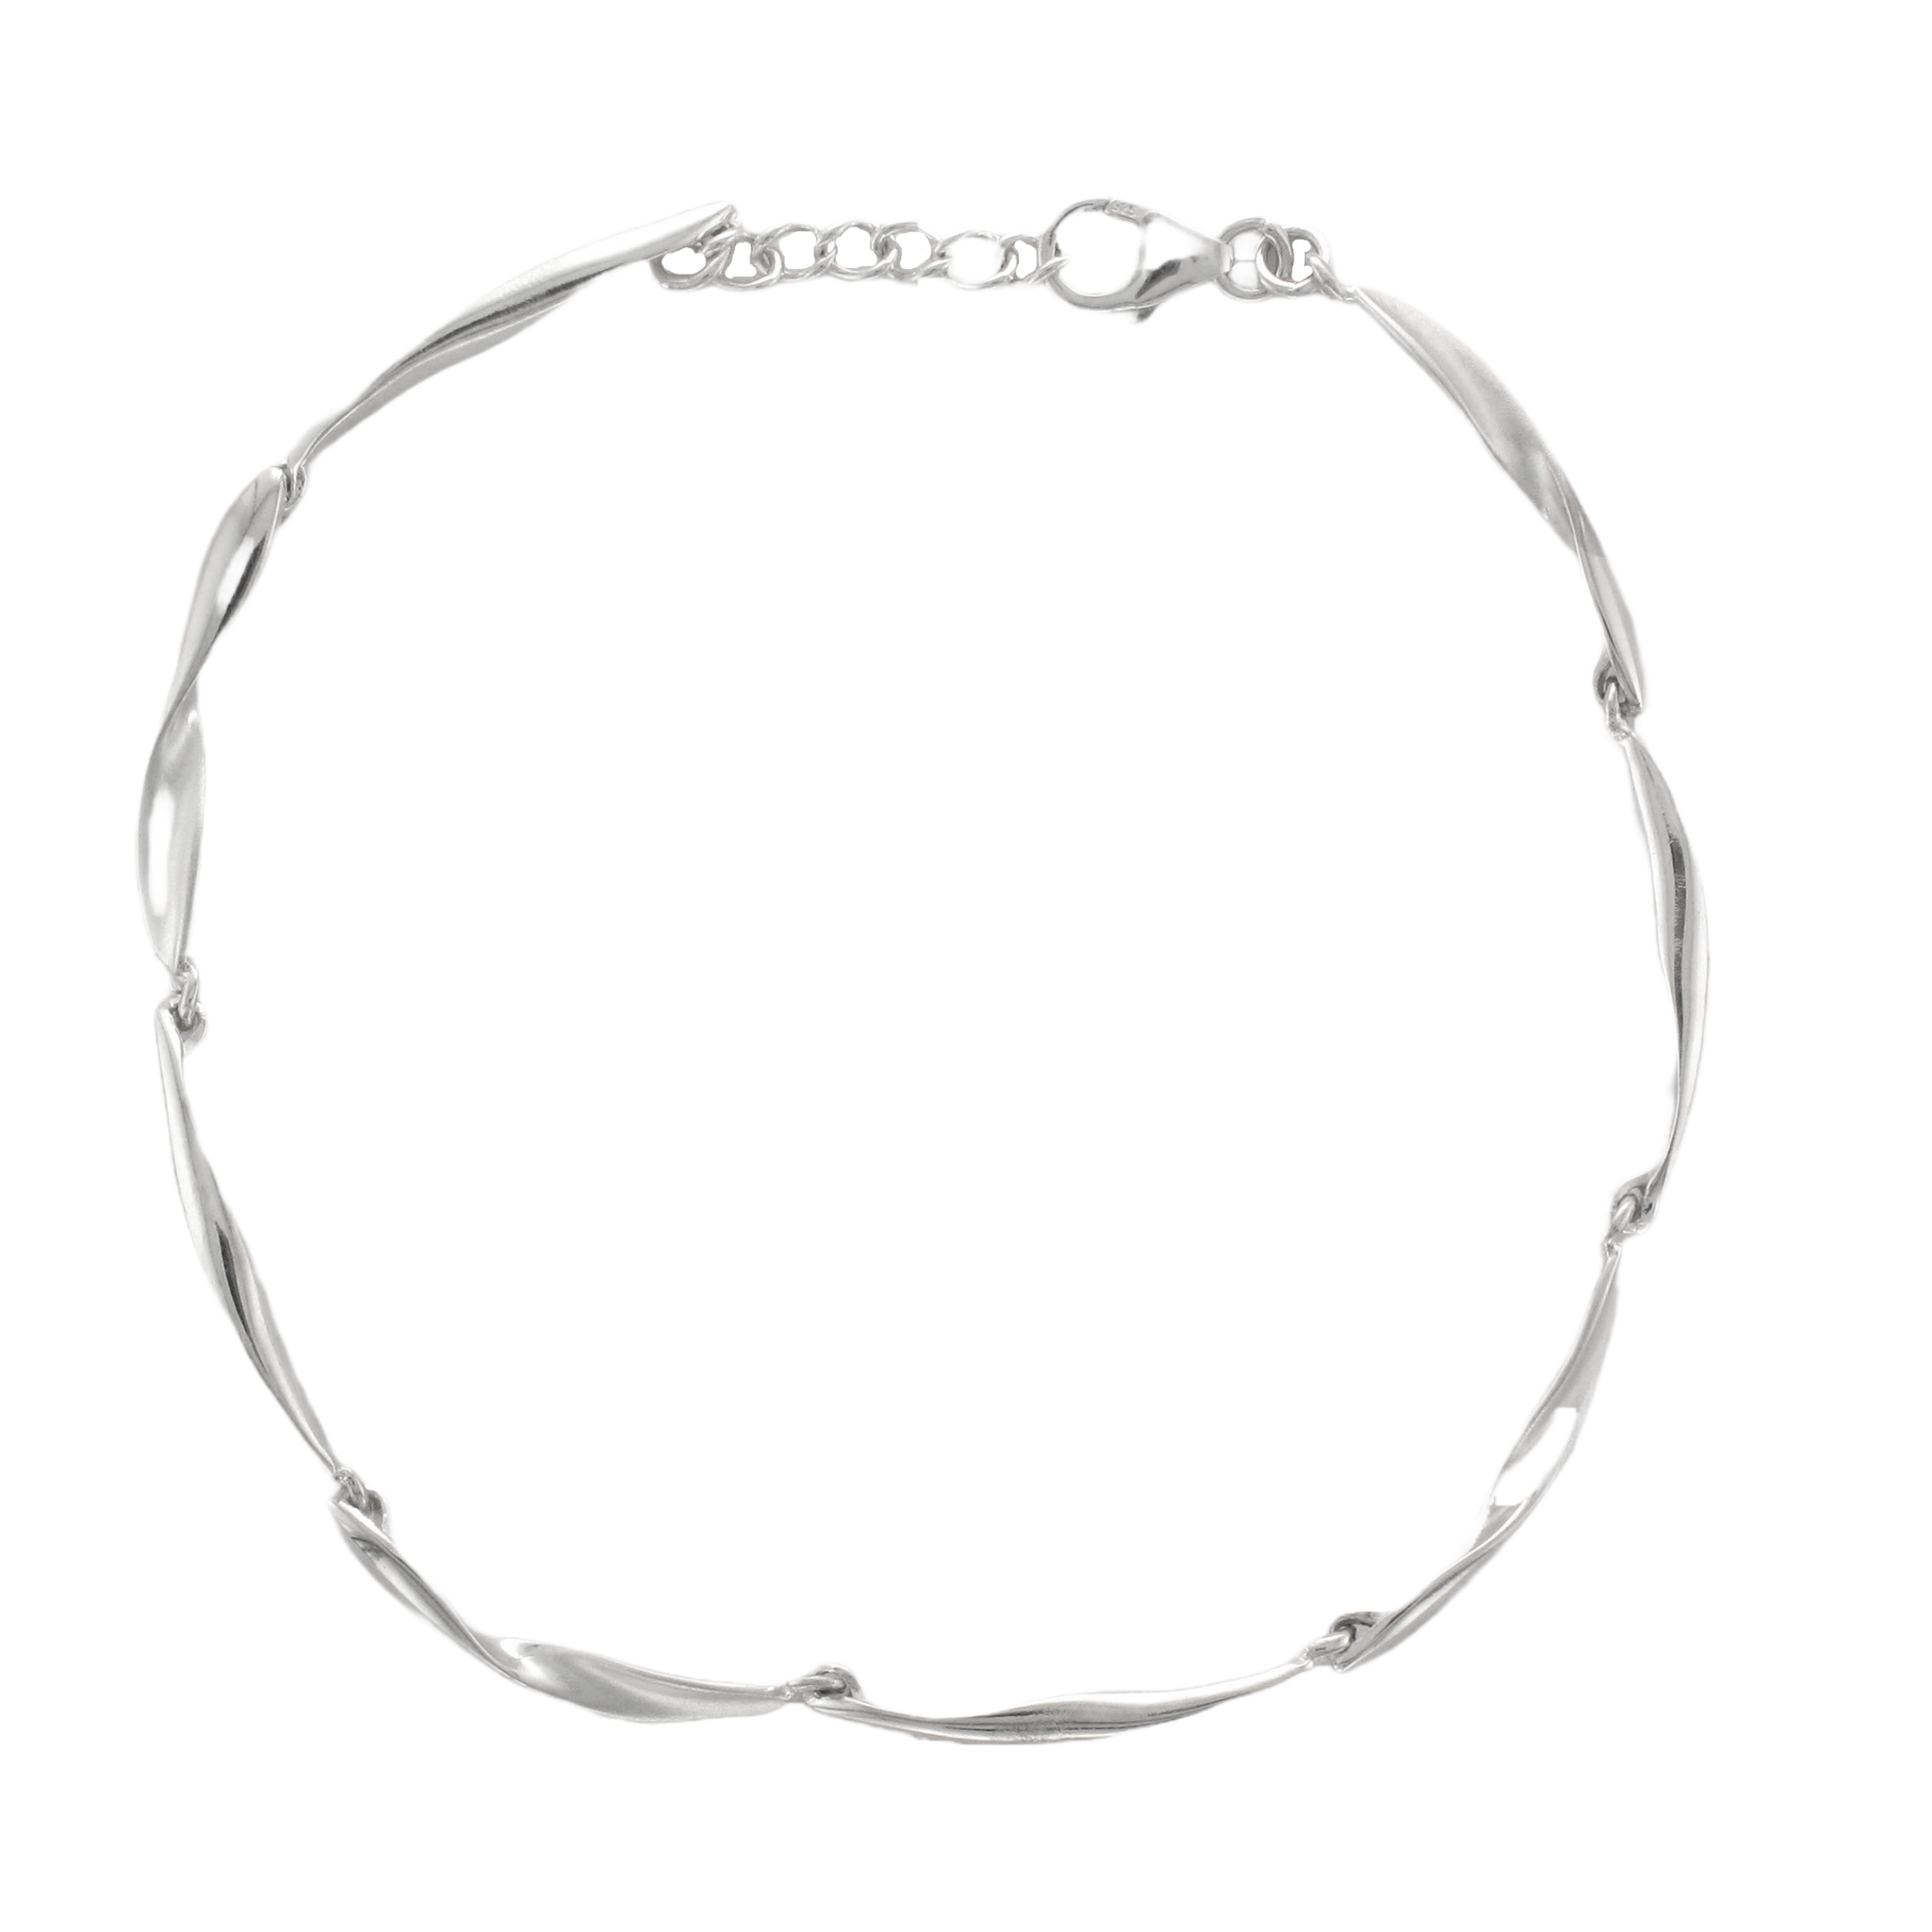 Silver Satin and Polished Twisted Link  Bracelet